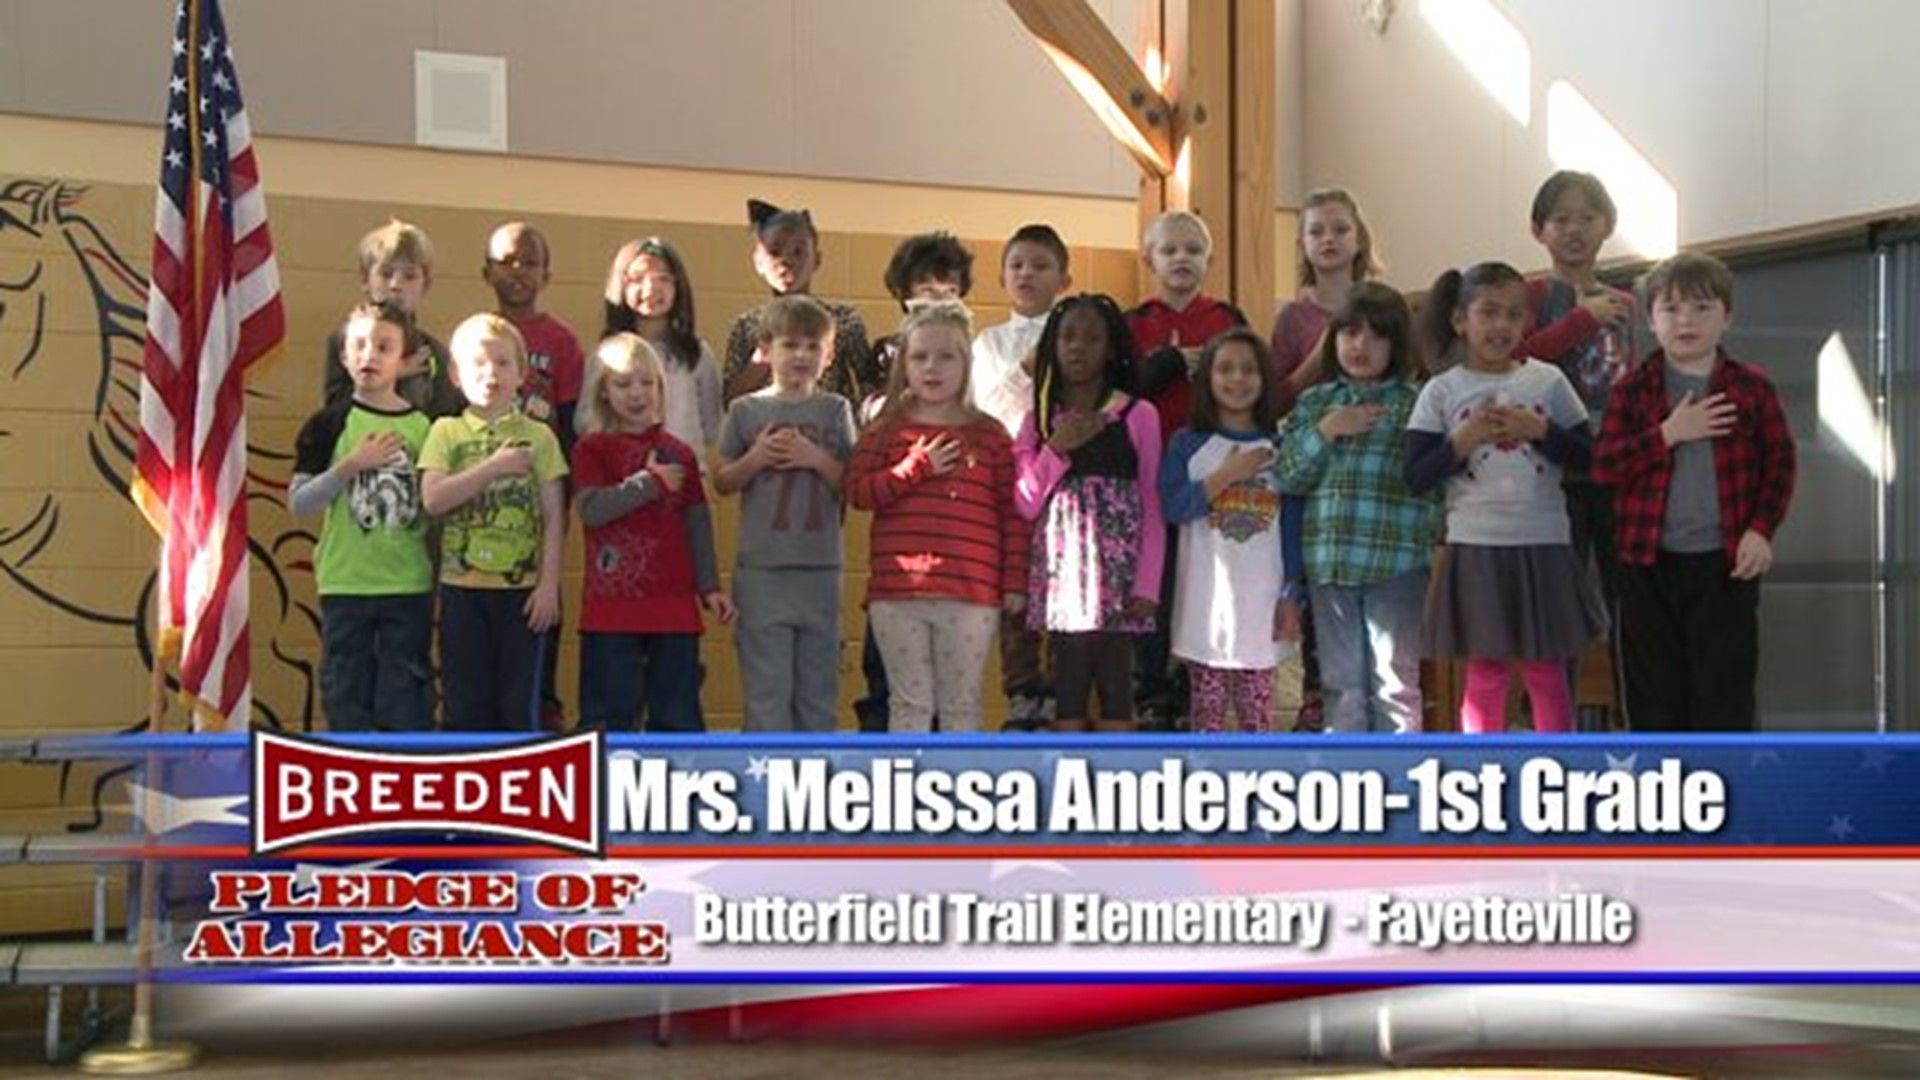 Butterfield Trail Elementary - Fayetteville, Mrs. Anderson - First Grade